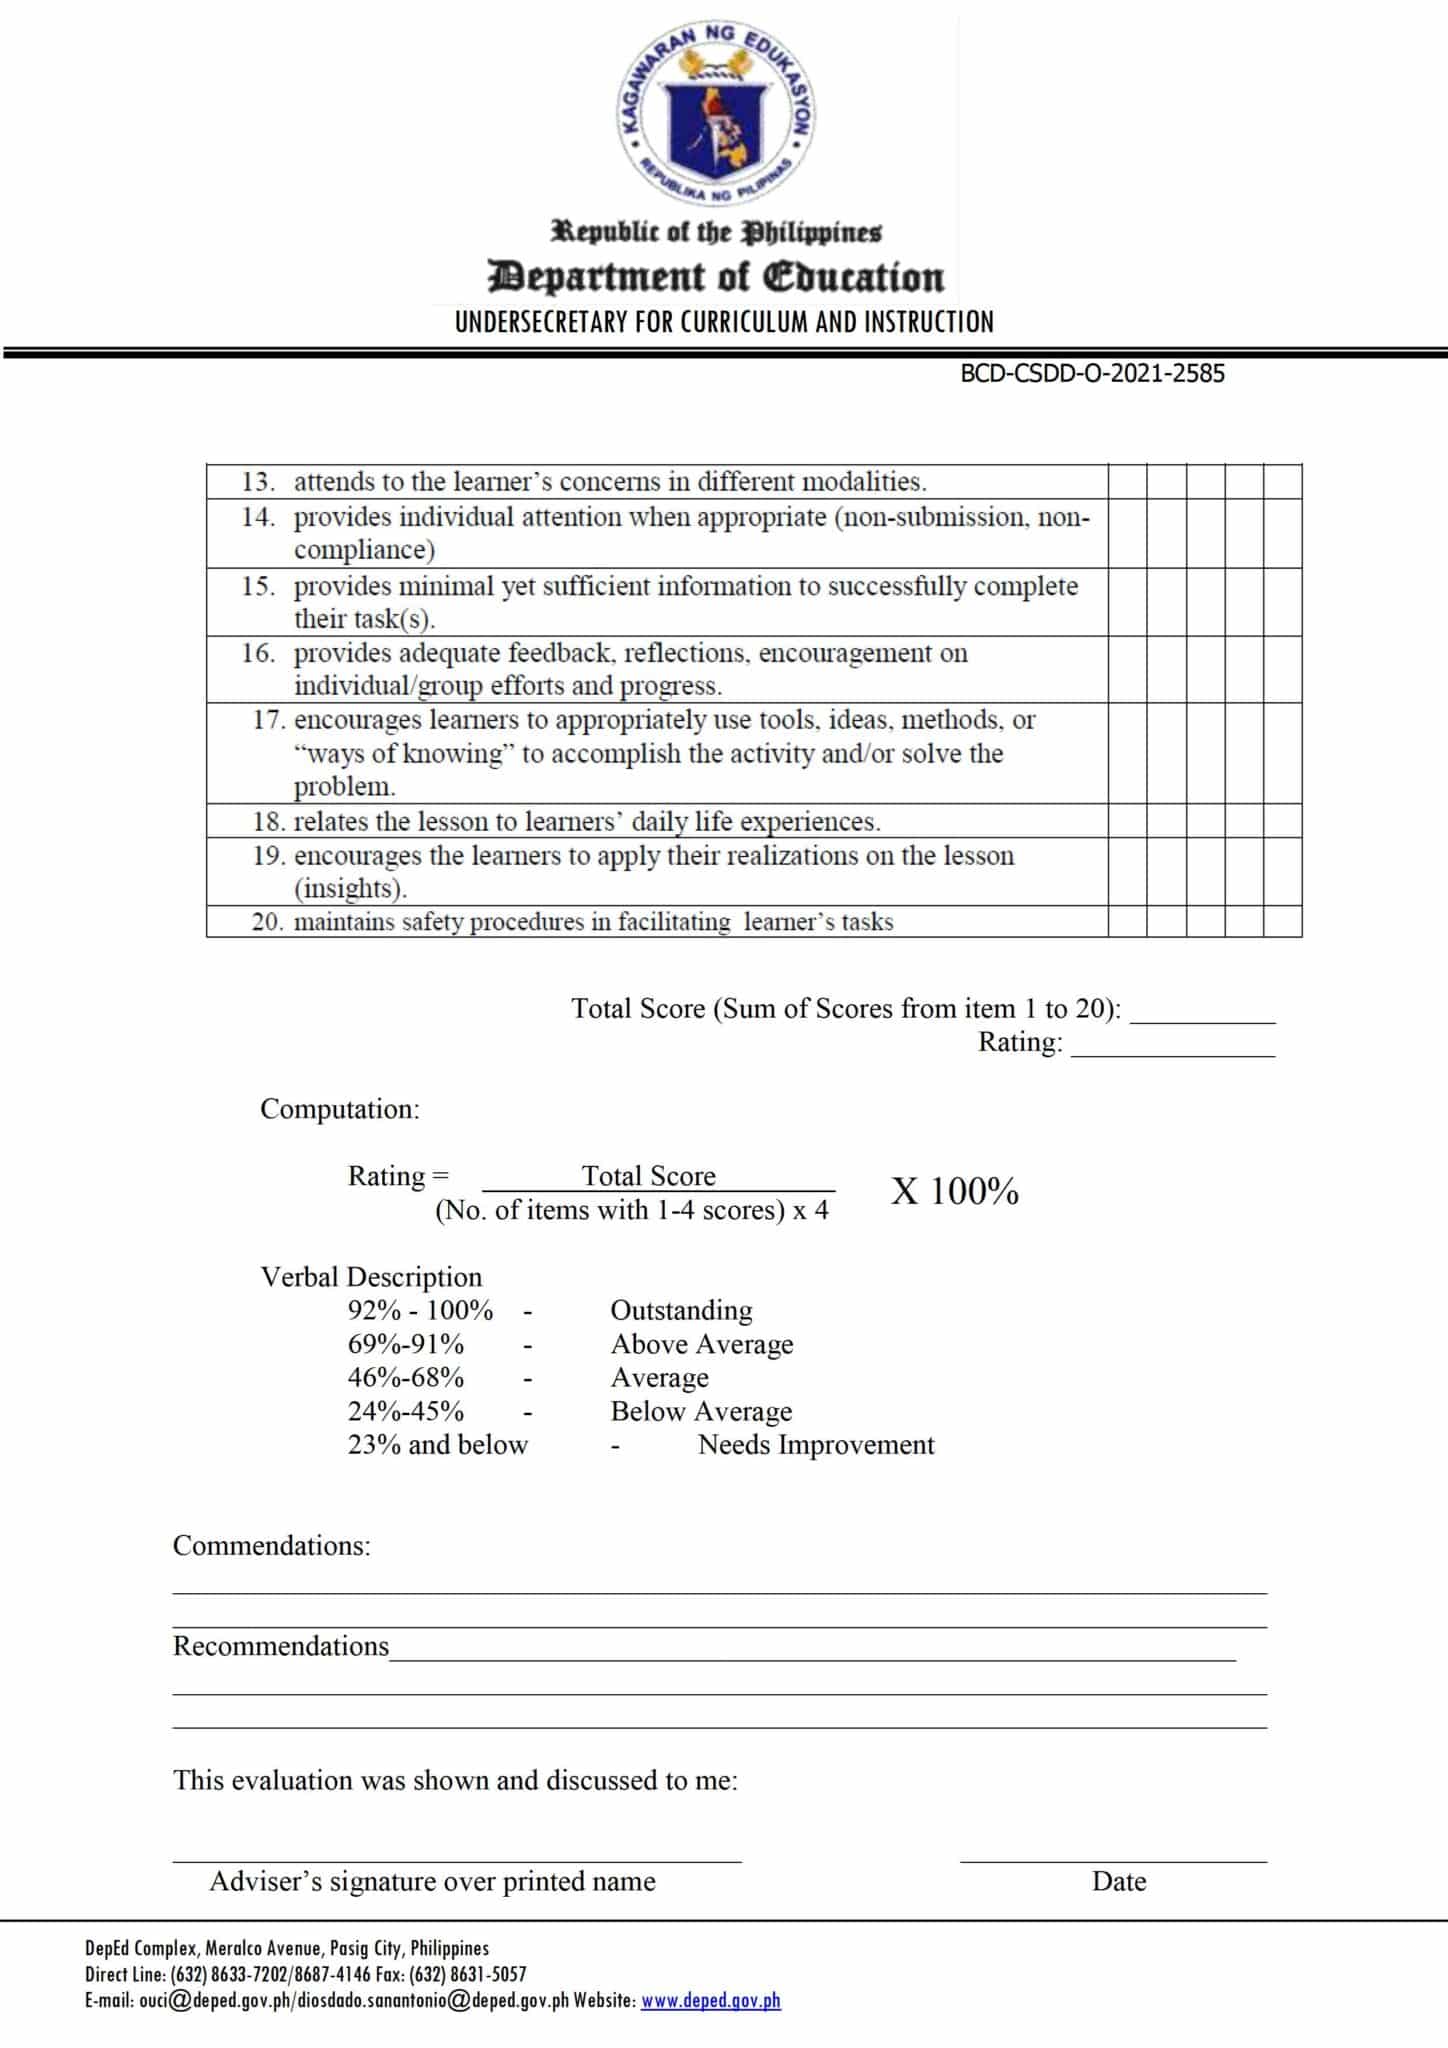 Deped Homeroom Guidance Class Observation Tool For School Year 2021 2022 Teacherph 5317